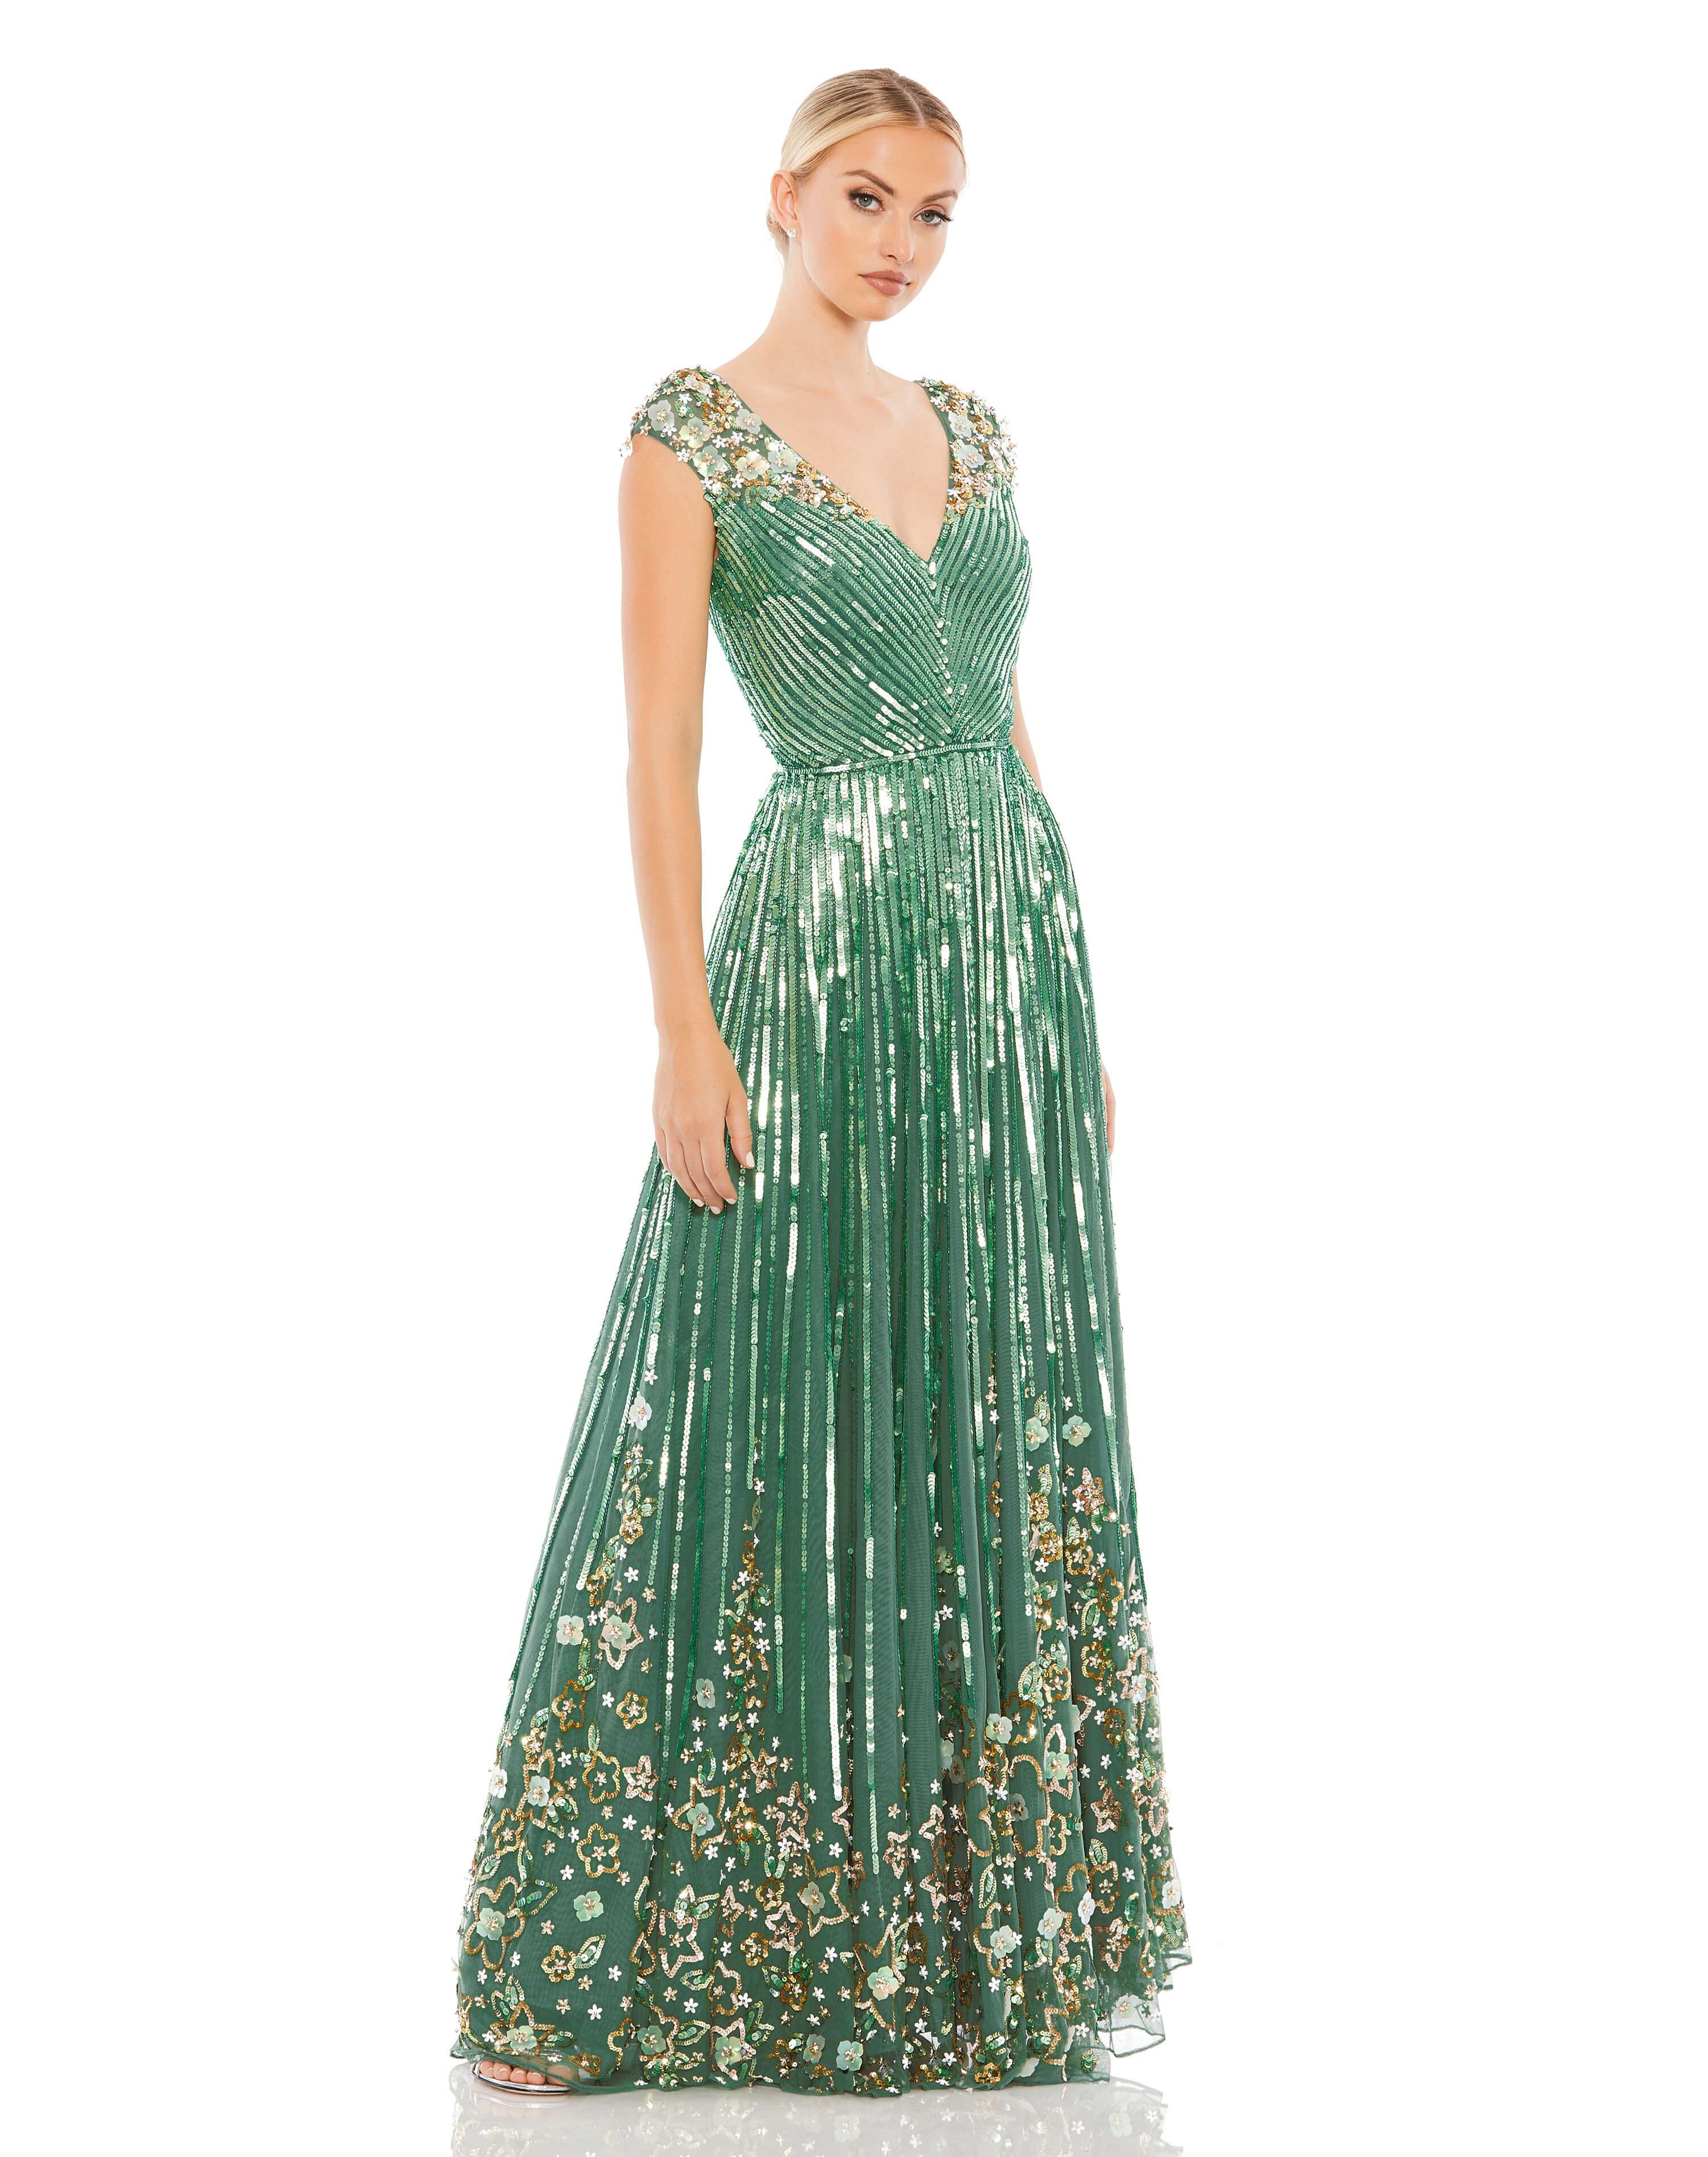 Sequin Floral Embellished Evening Gown